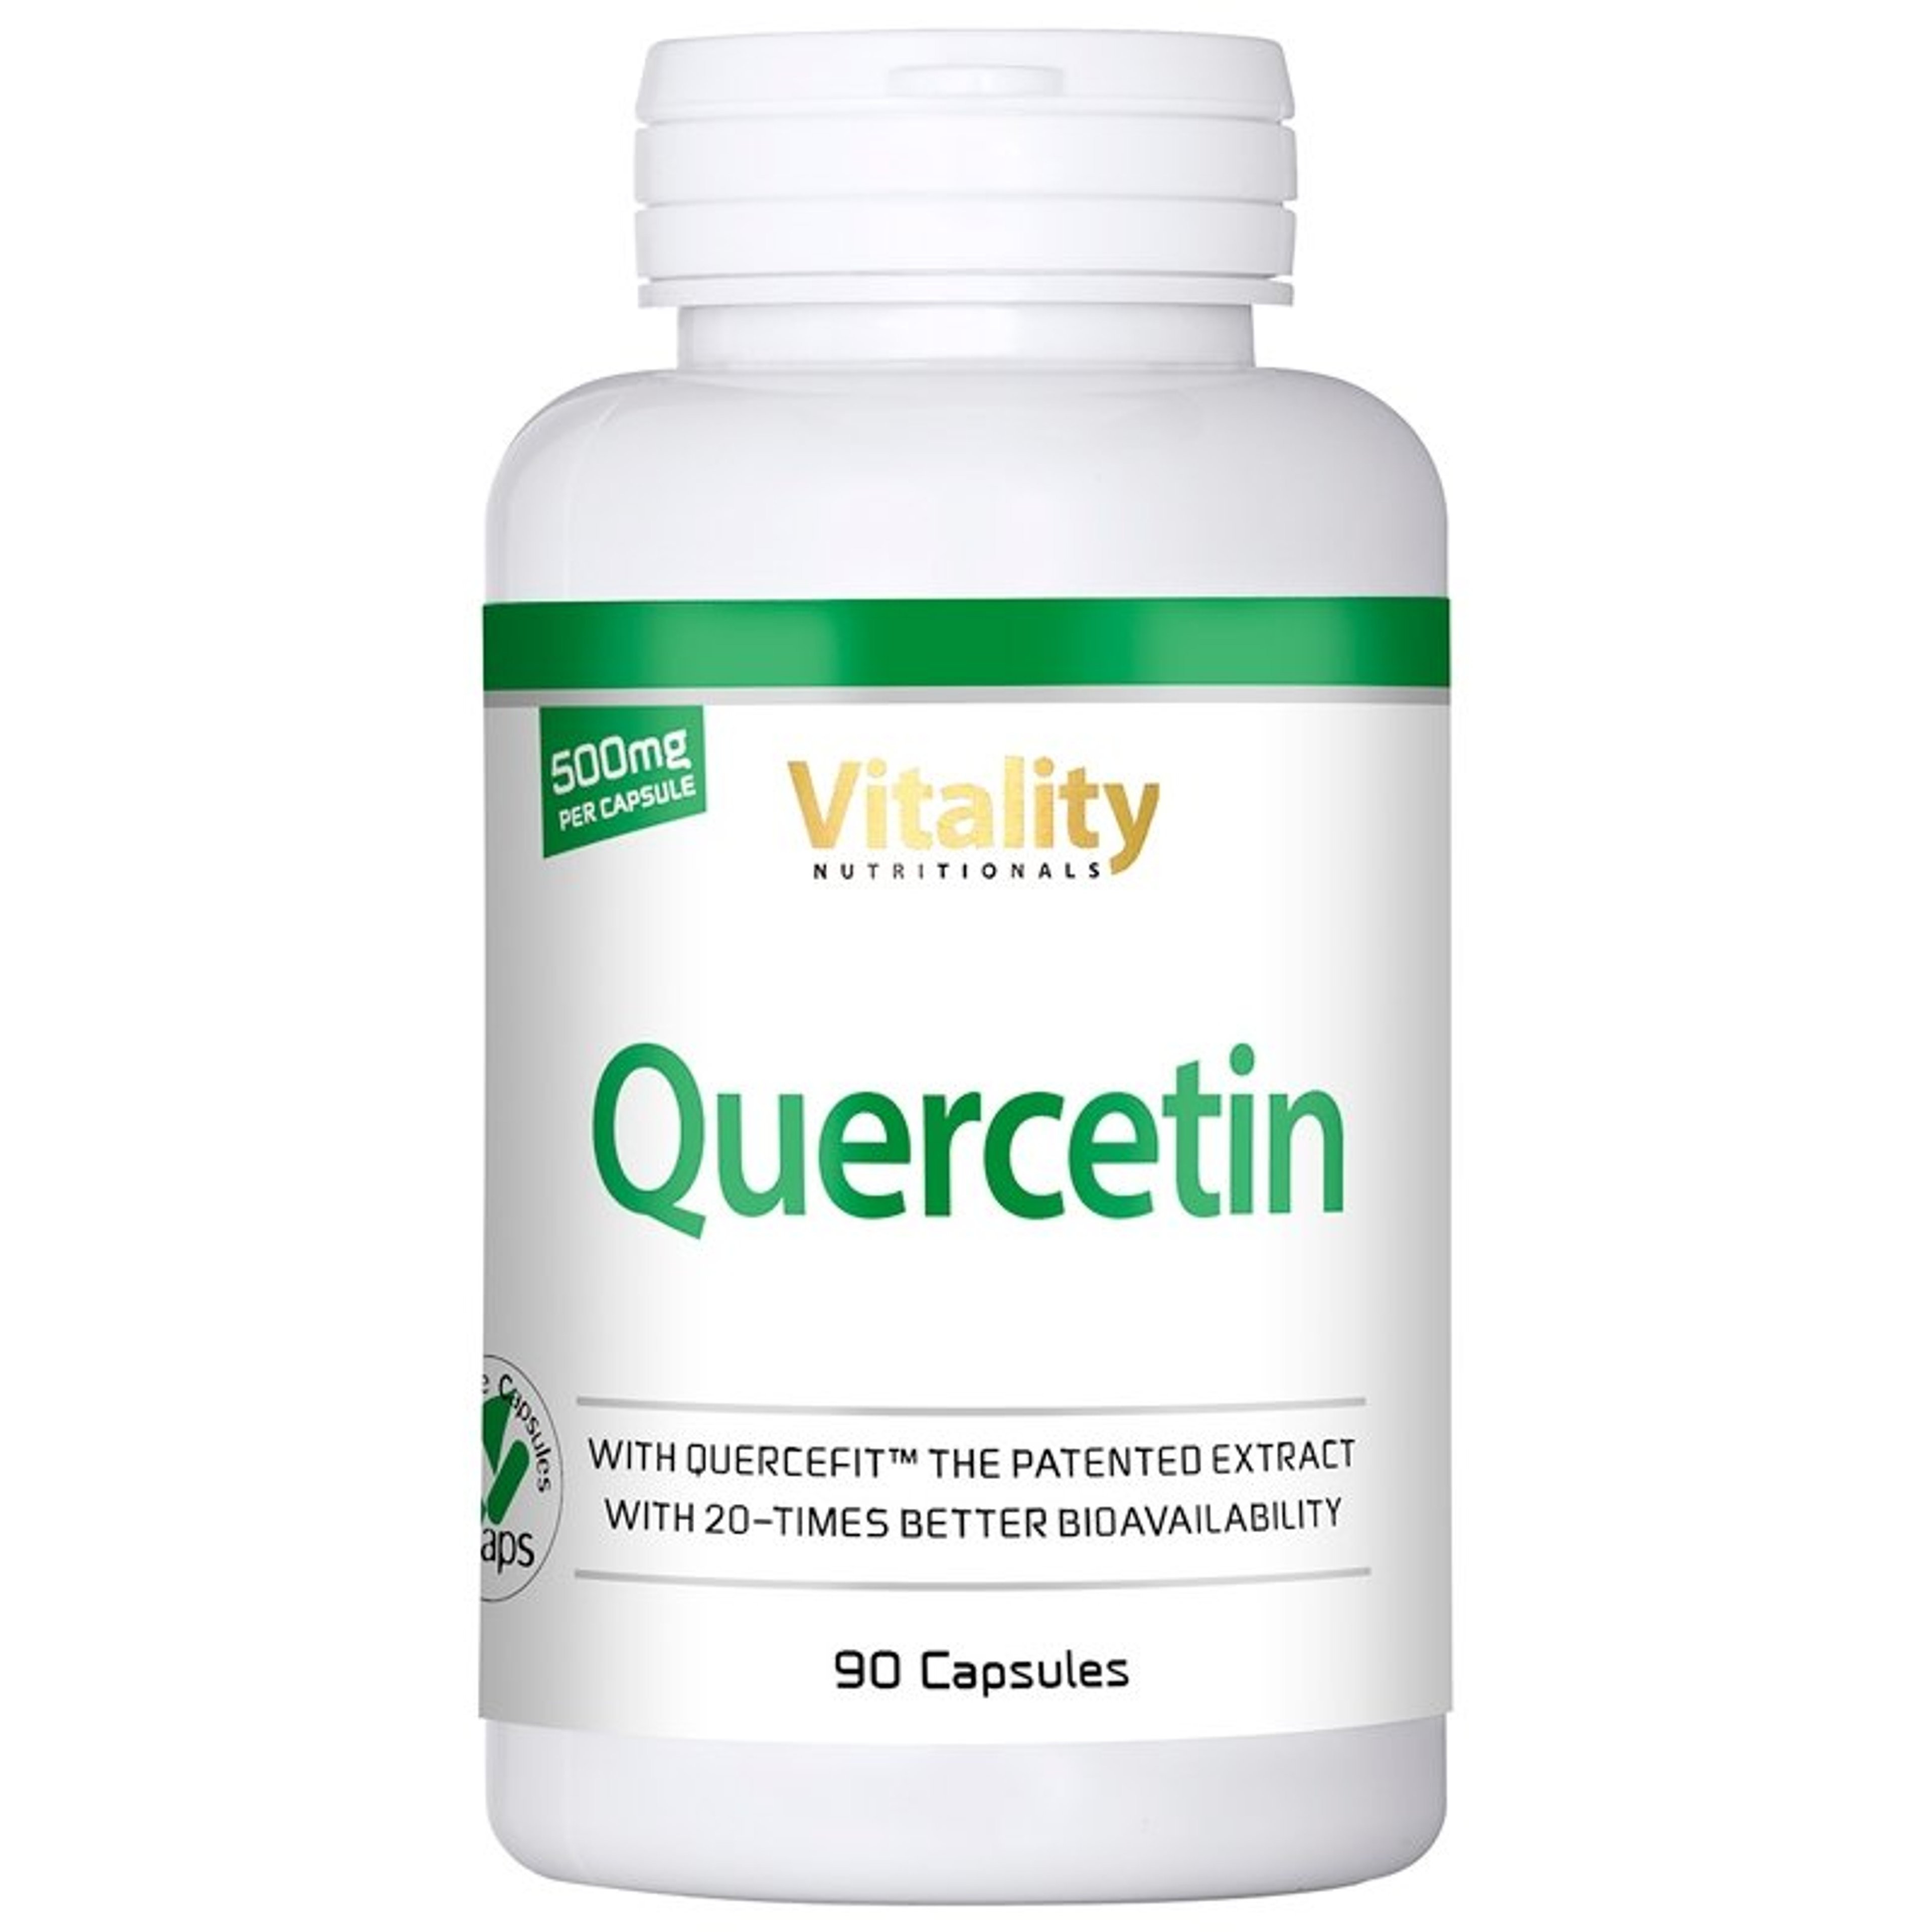 vitality-nutritionals-quercetin.jpg